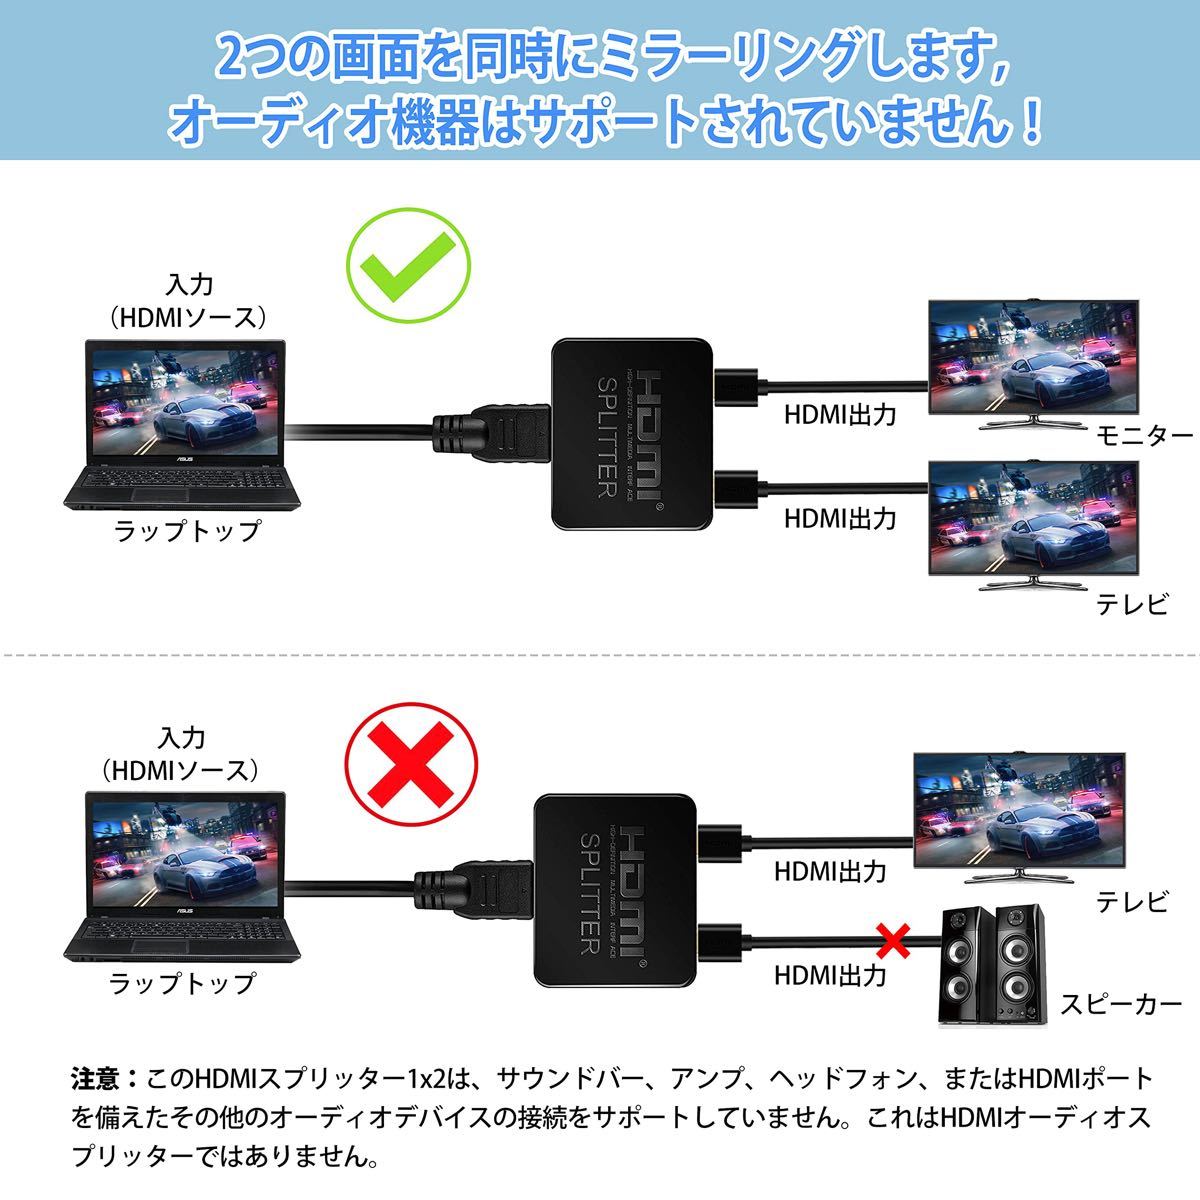 4-25 HDMI 分配器 1入力2出力 4K HDMI スプリッター